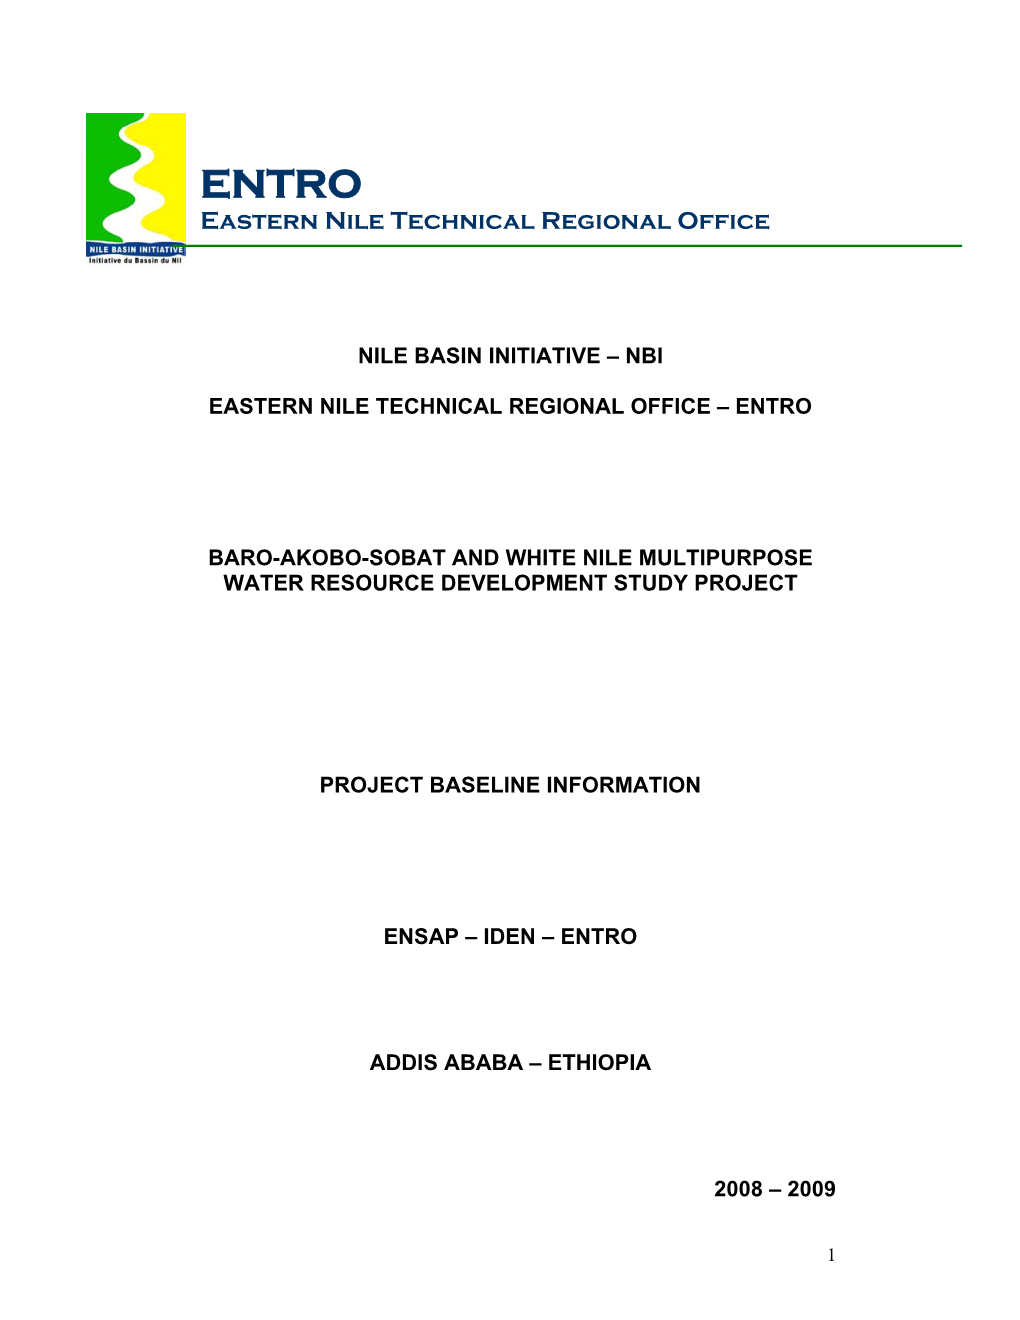 Eastern Nile Technical Regional Office